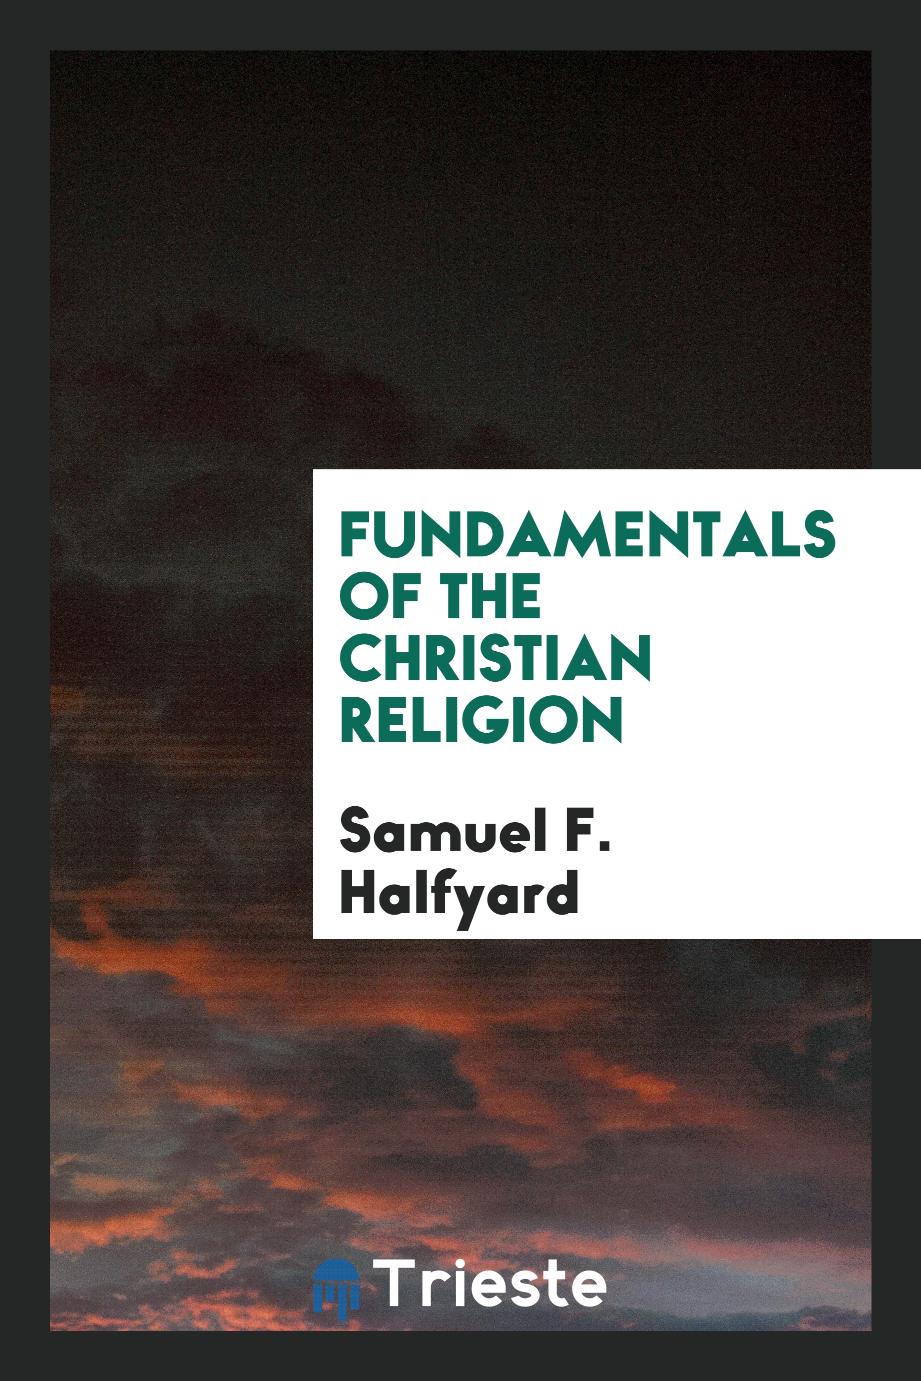 Fundamentals of the Christian religion